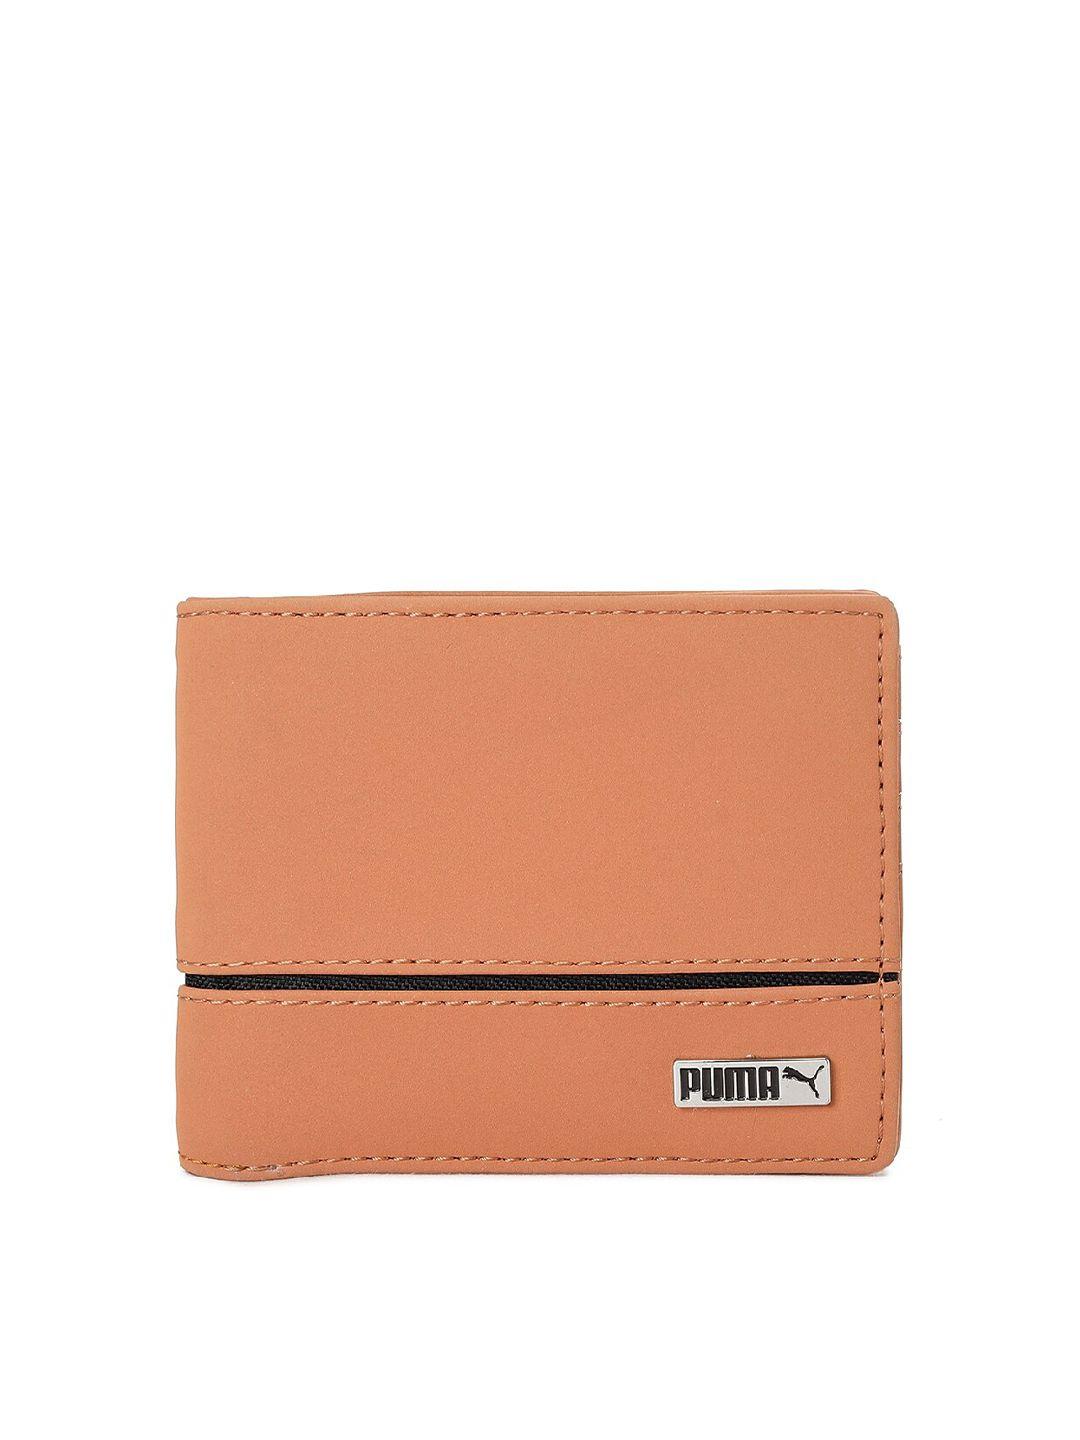 puma-men-brown-two-fold-style-wallet